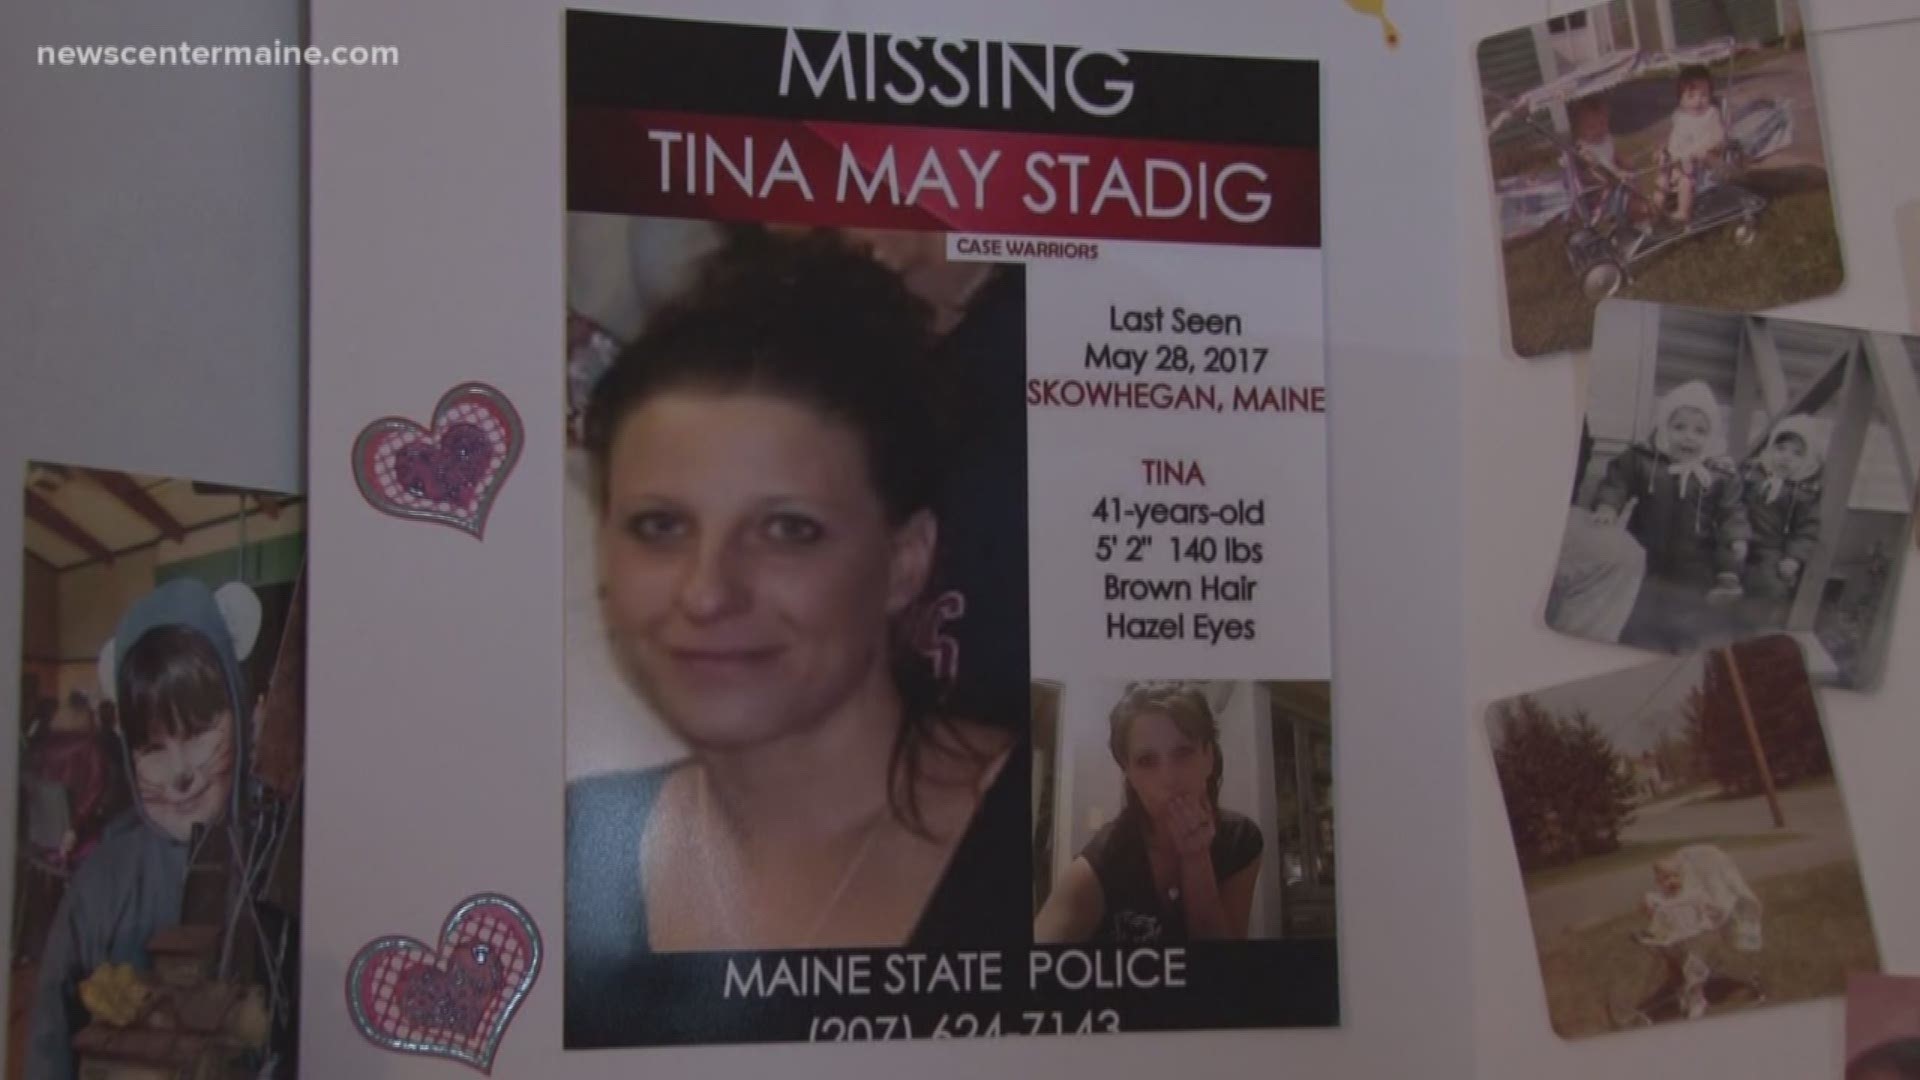 41-year-old Tina May Stadig was last seen on May 28, 2017.